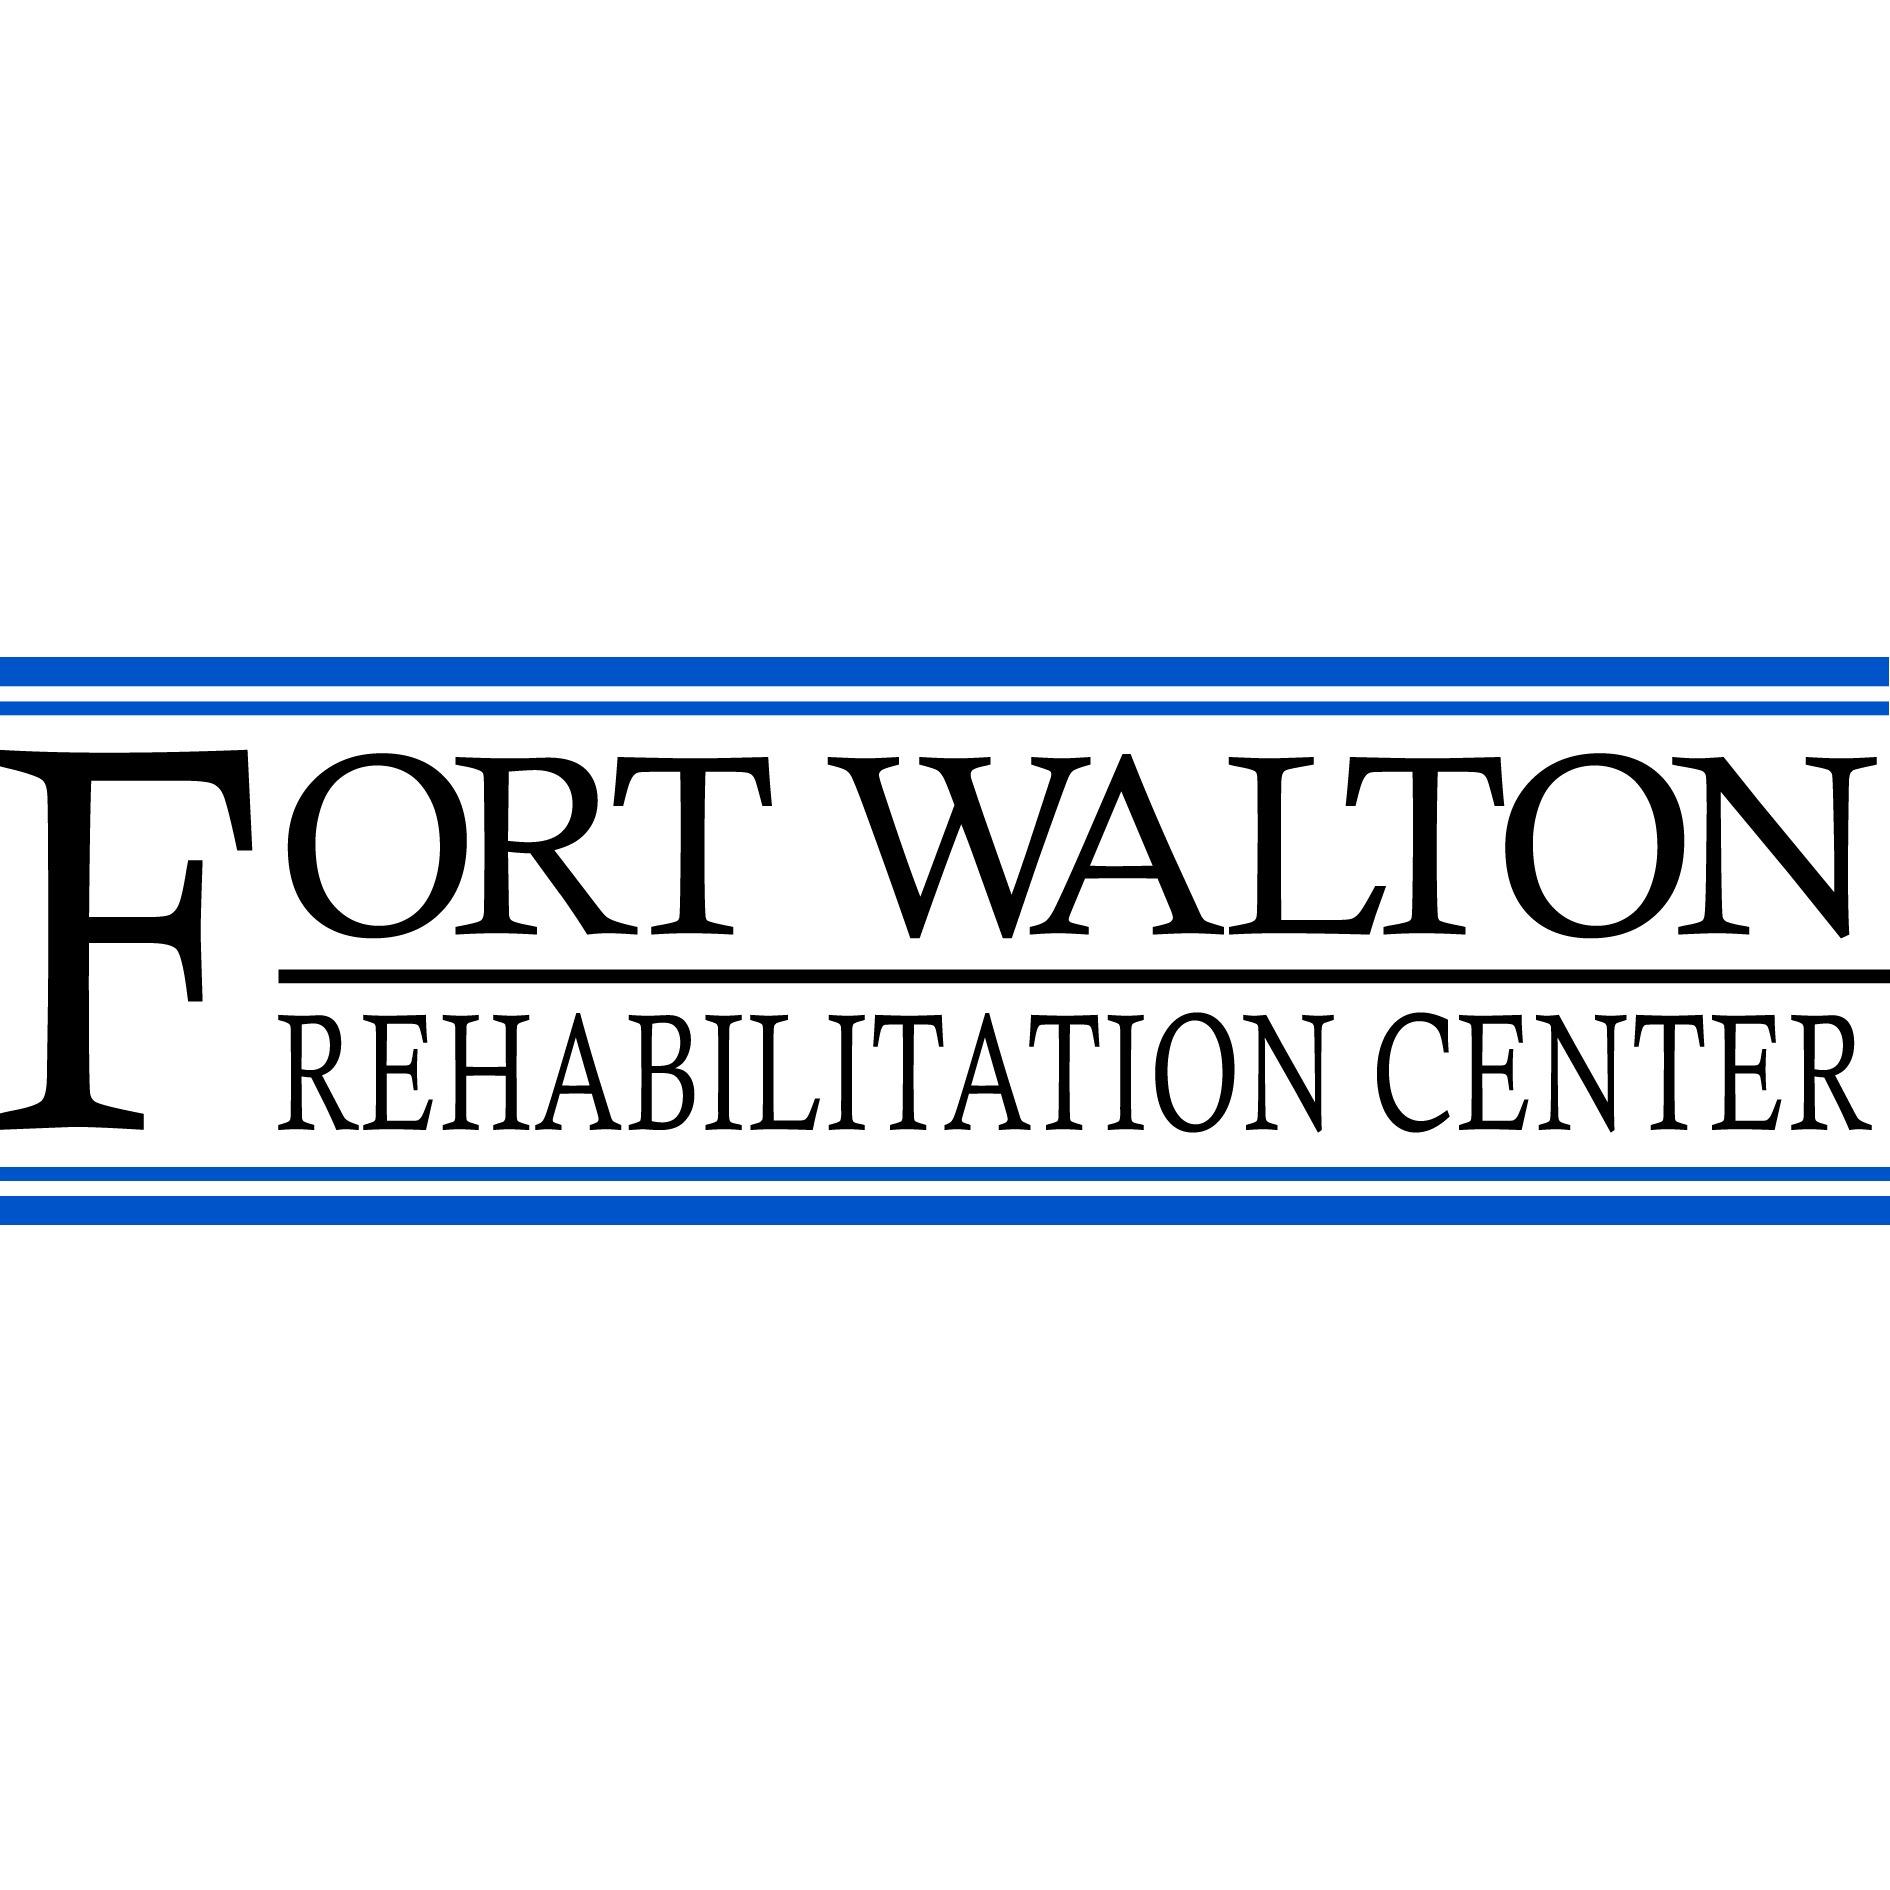 Fort Walton Rehabilitation Center - Fort Walton Beach, FL 32547 - (850)863-2066 | ShowMeLocal.com